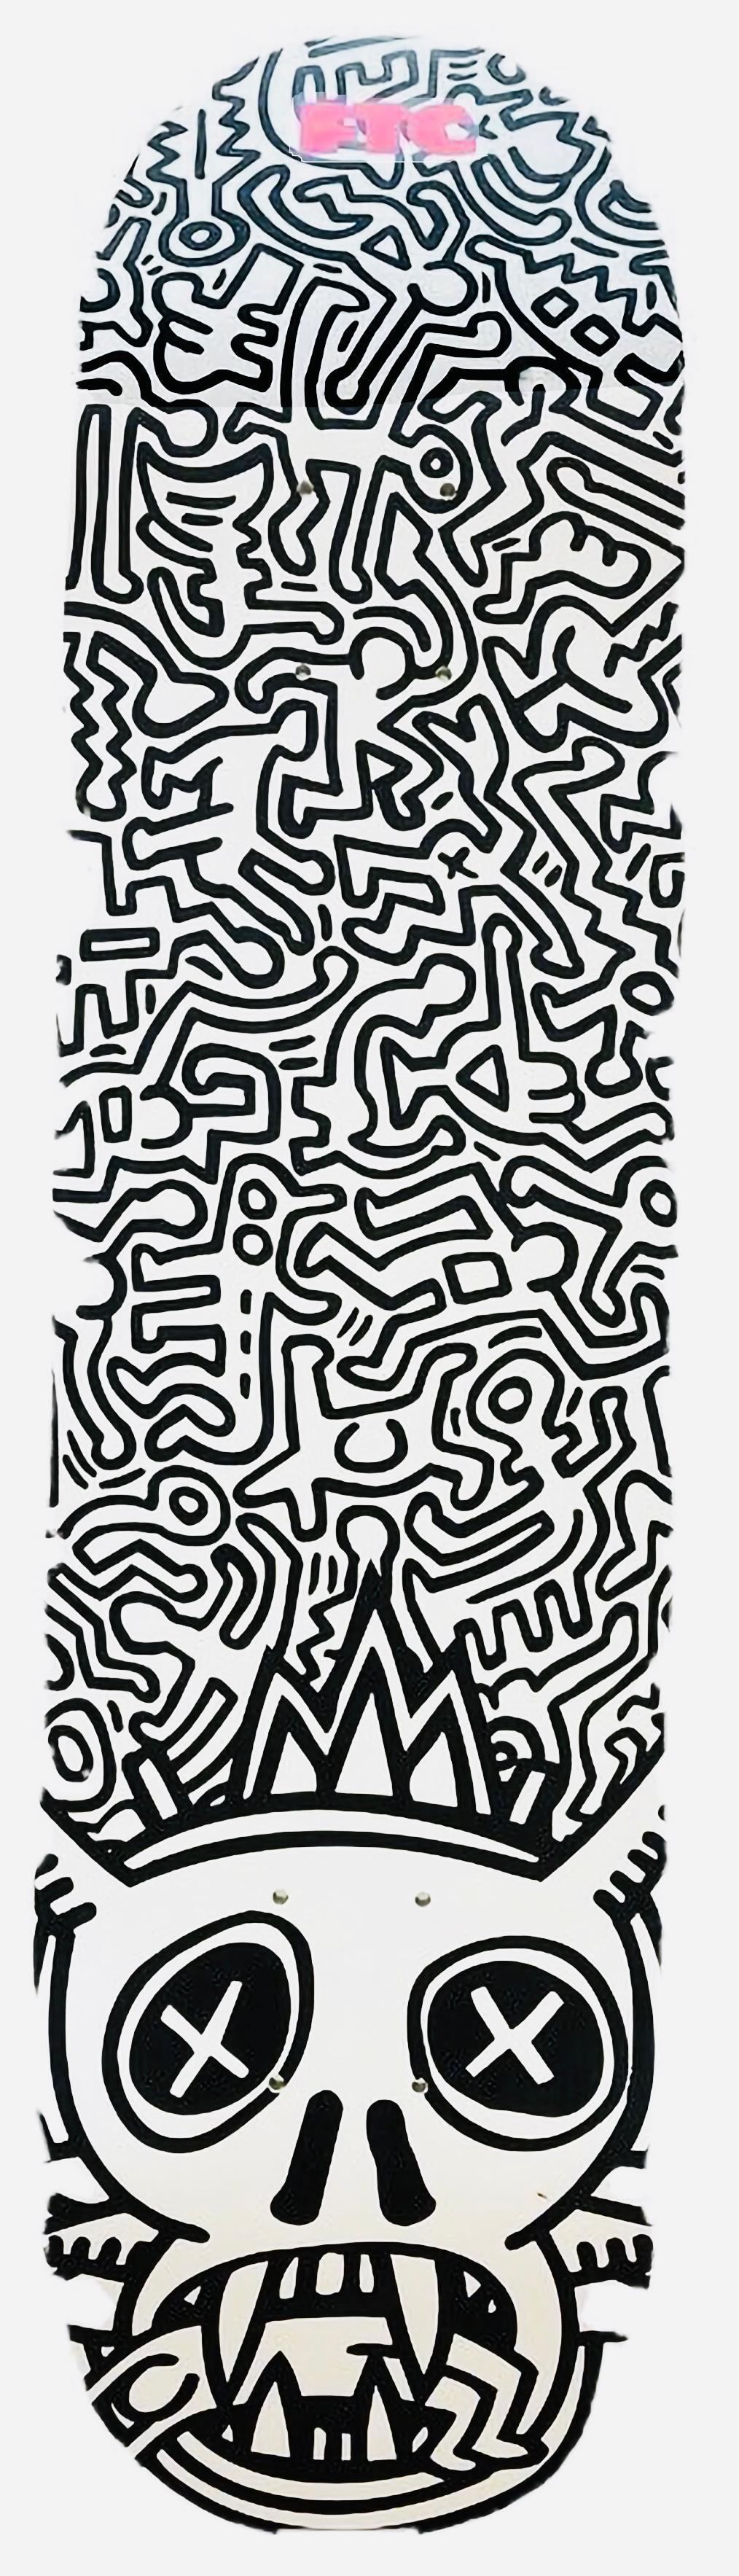 Vintage Keith Haring Skateboard Deck (Keith Haring Skateboard Deck) – Print von (after) Keith Haring